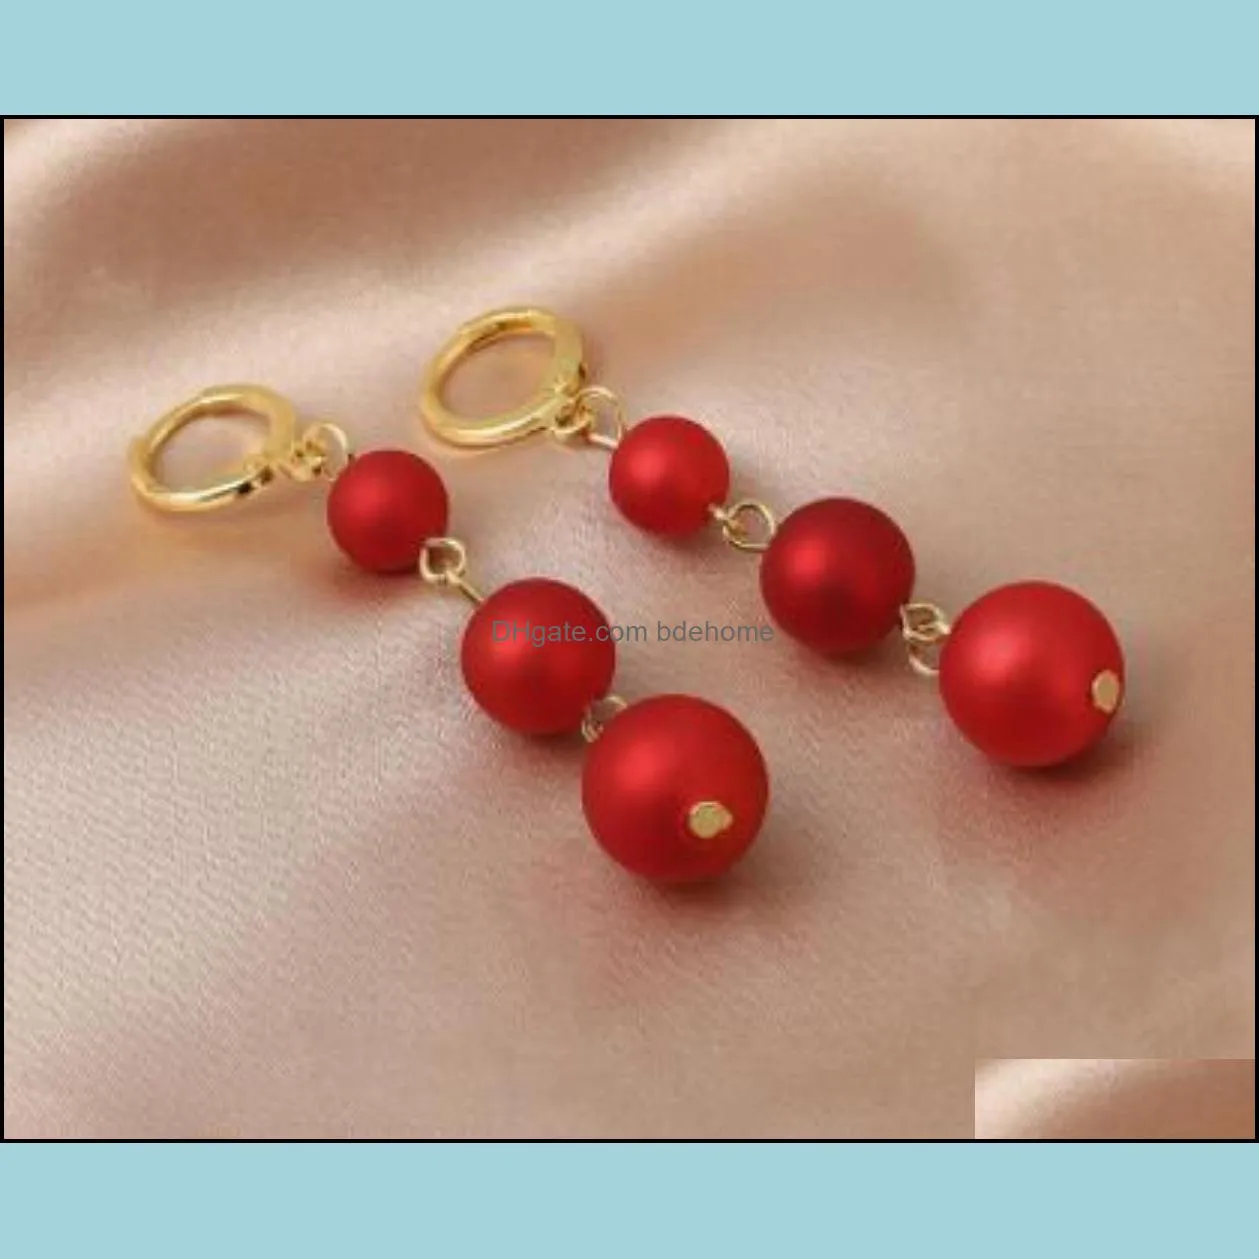 Andra andra ￶rh￤ngen smycken naturlig ￤ngelit ￤delsten dingle charm guld f￤rg semiprecious kedja long lady mode present dhuzu drop otqvn